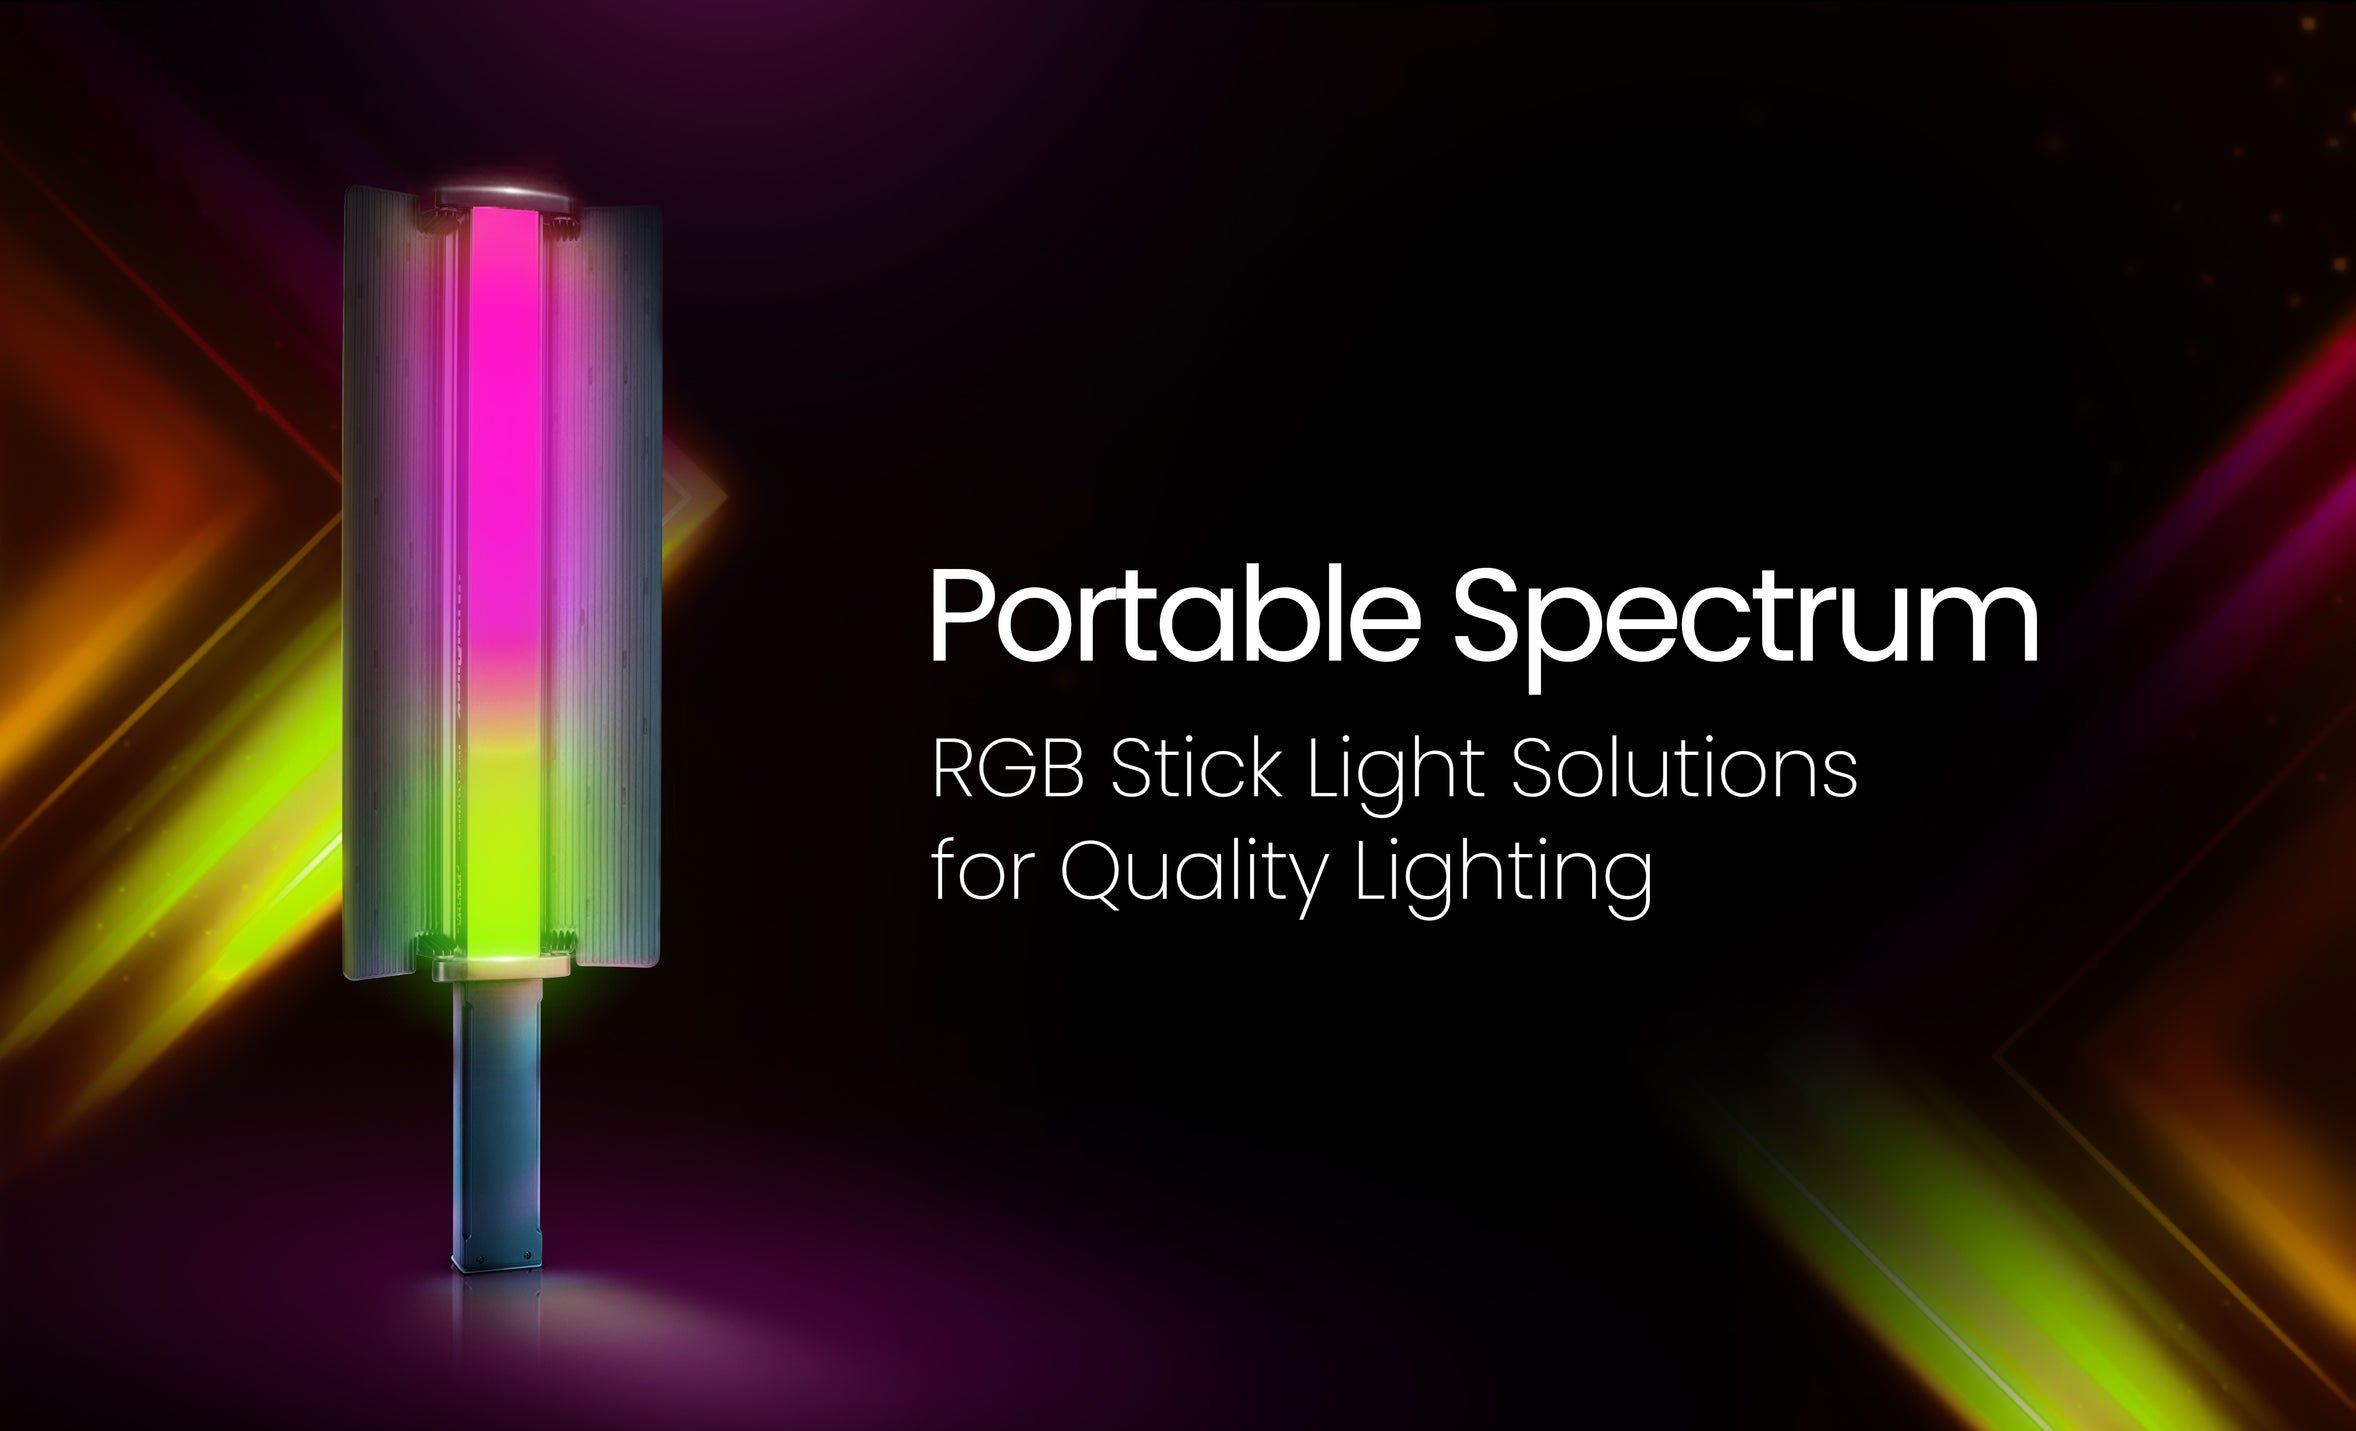 Portable Spectrum: RGB Stick Light Solutions for Quality Lighting